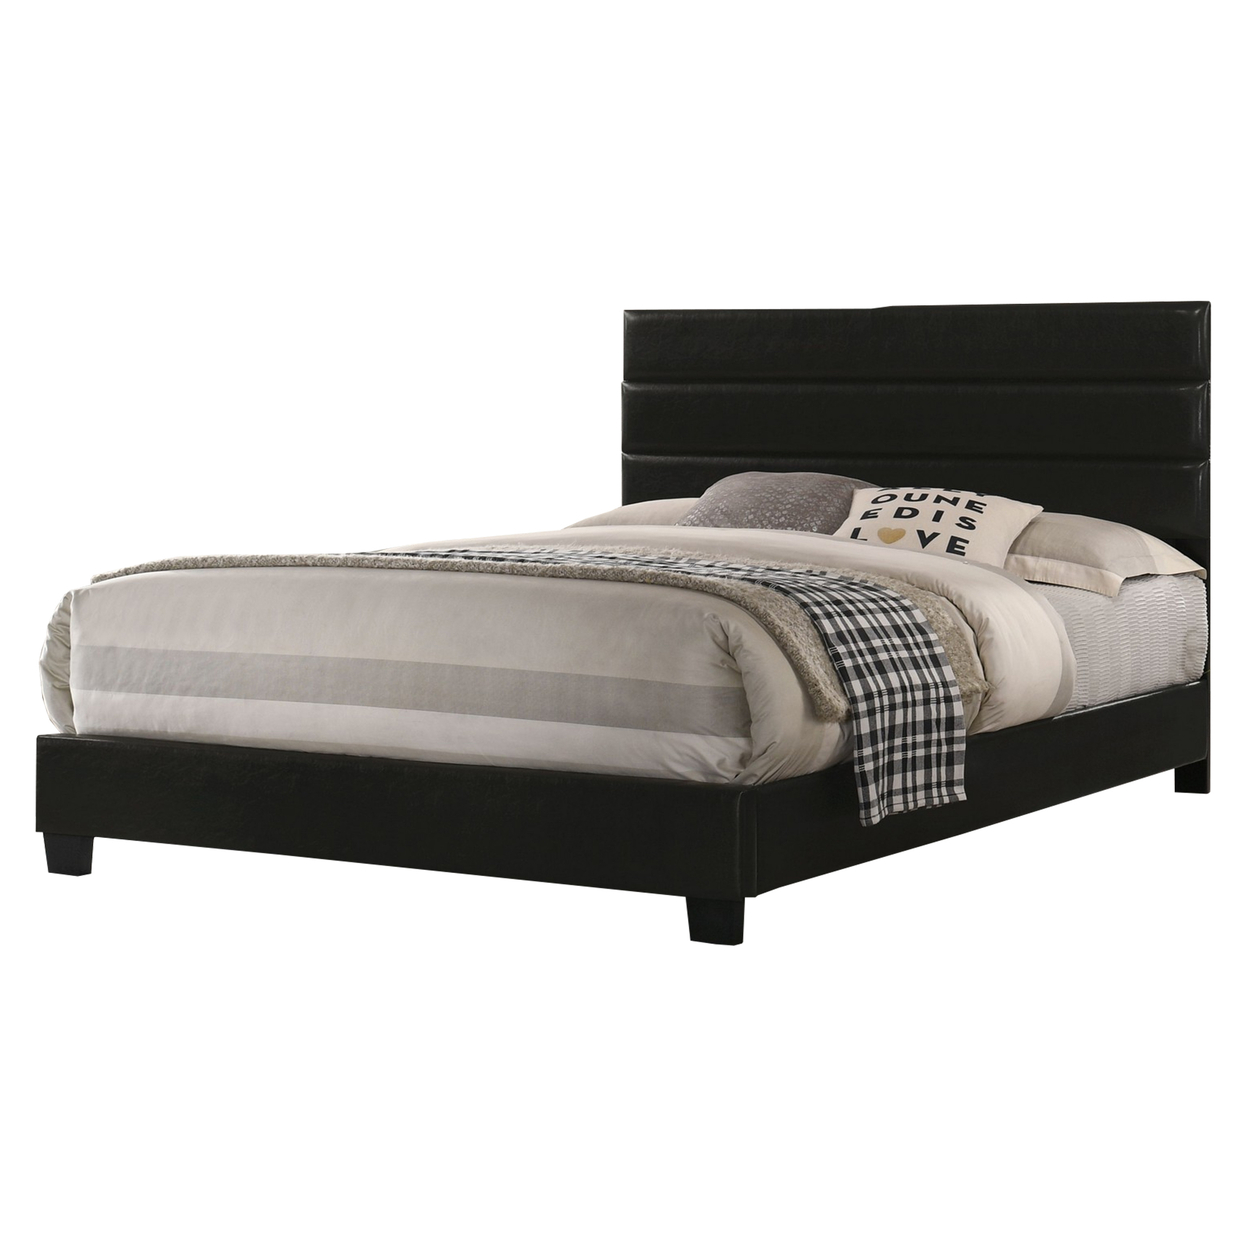 Leatherette Upholstered King Bed With Panel Headboard, Black- Saltoro Sherpi